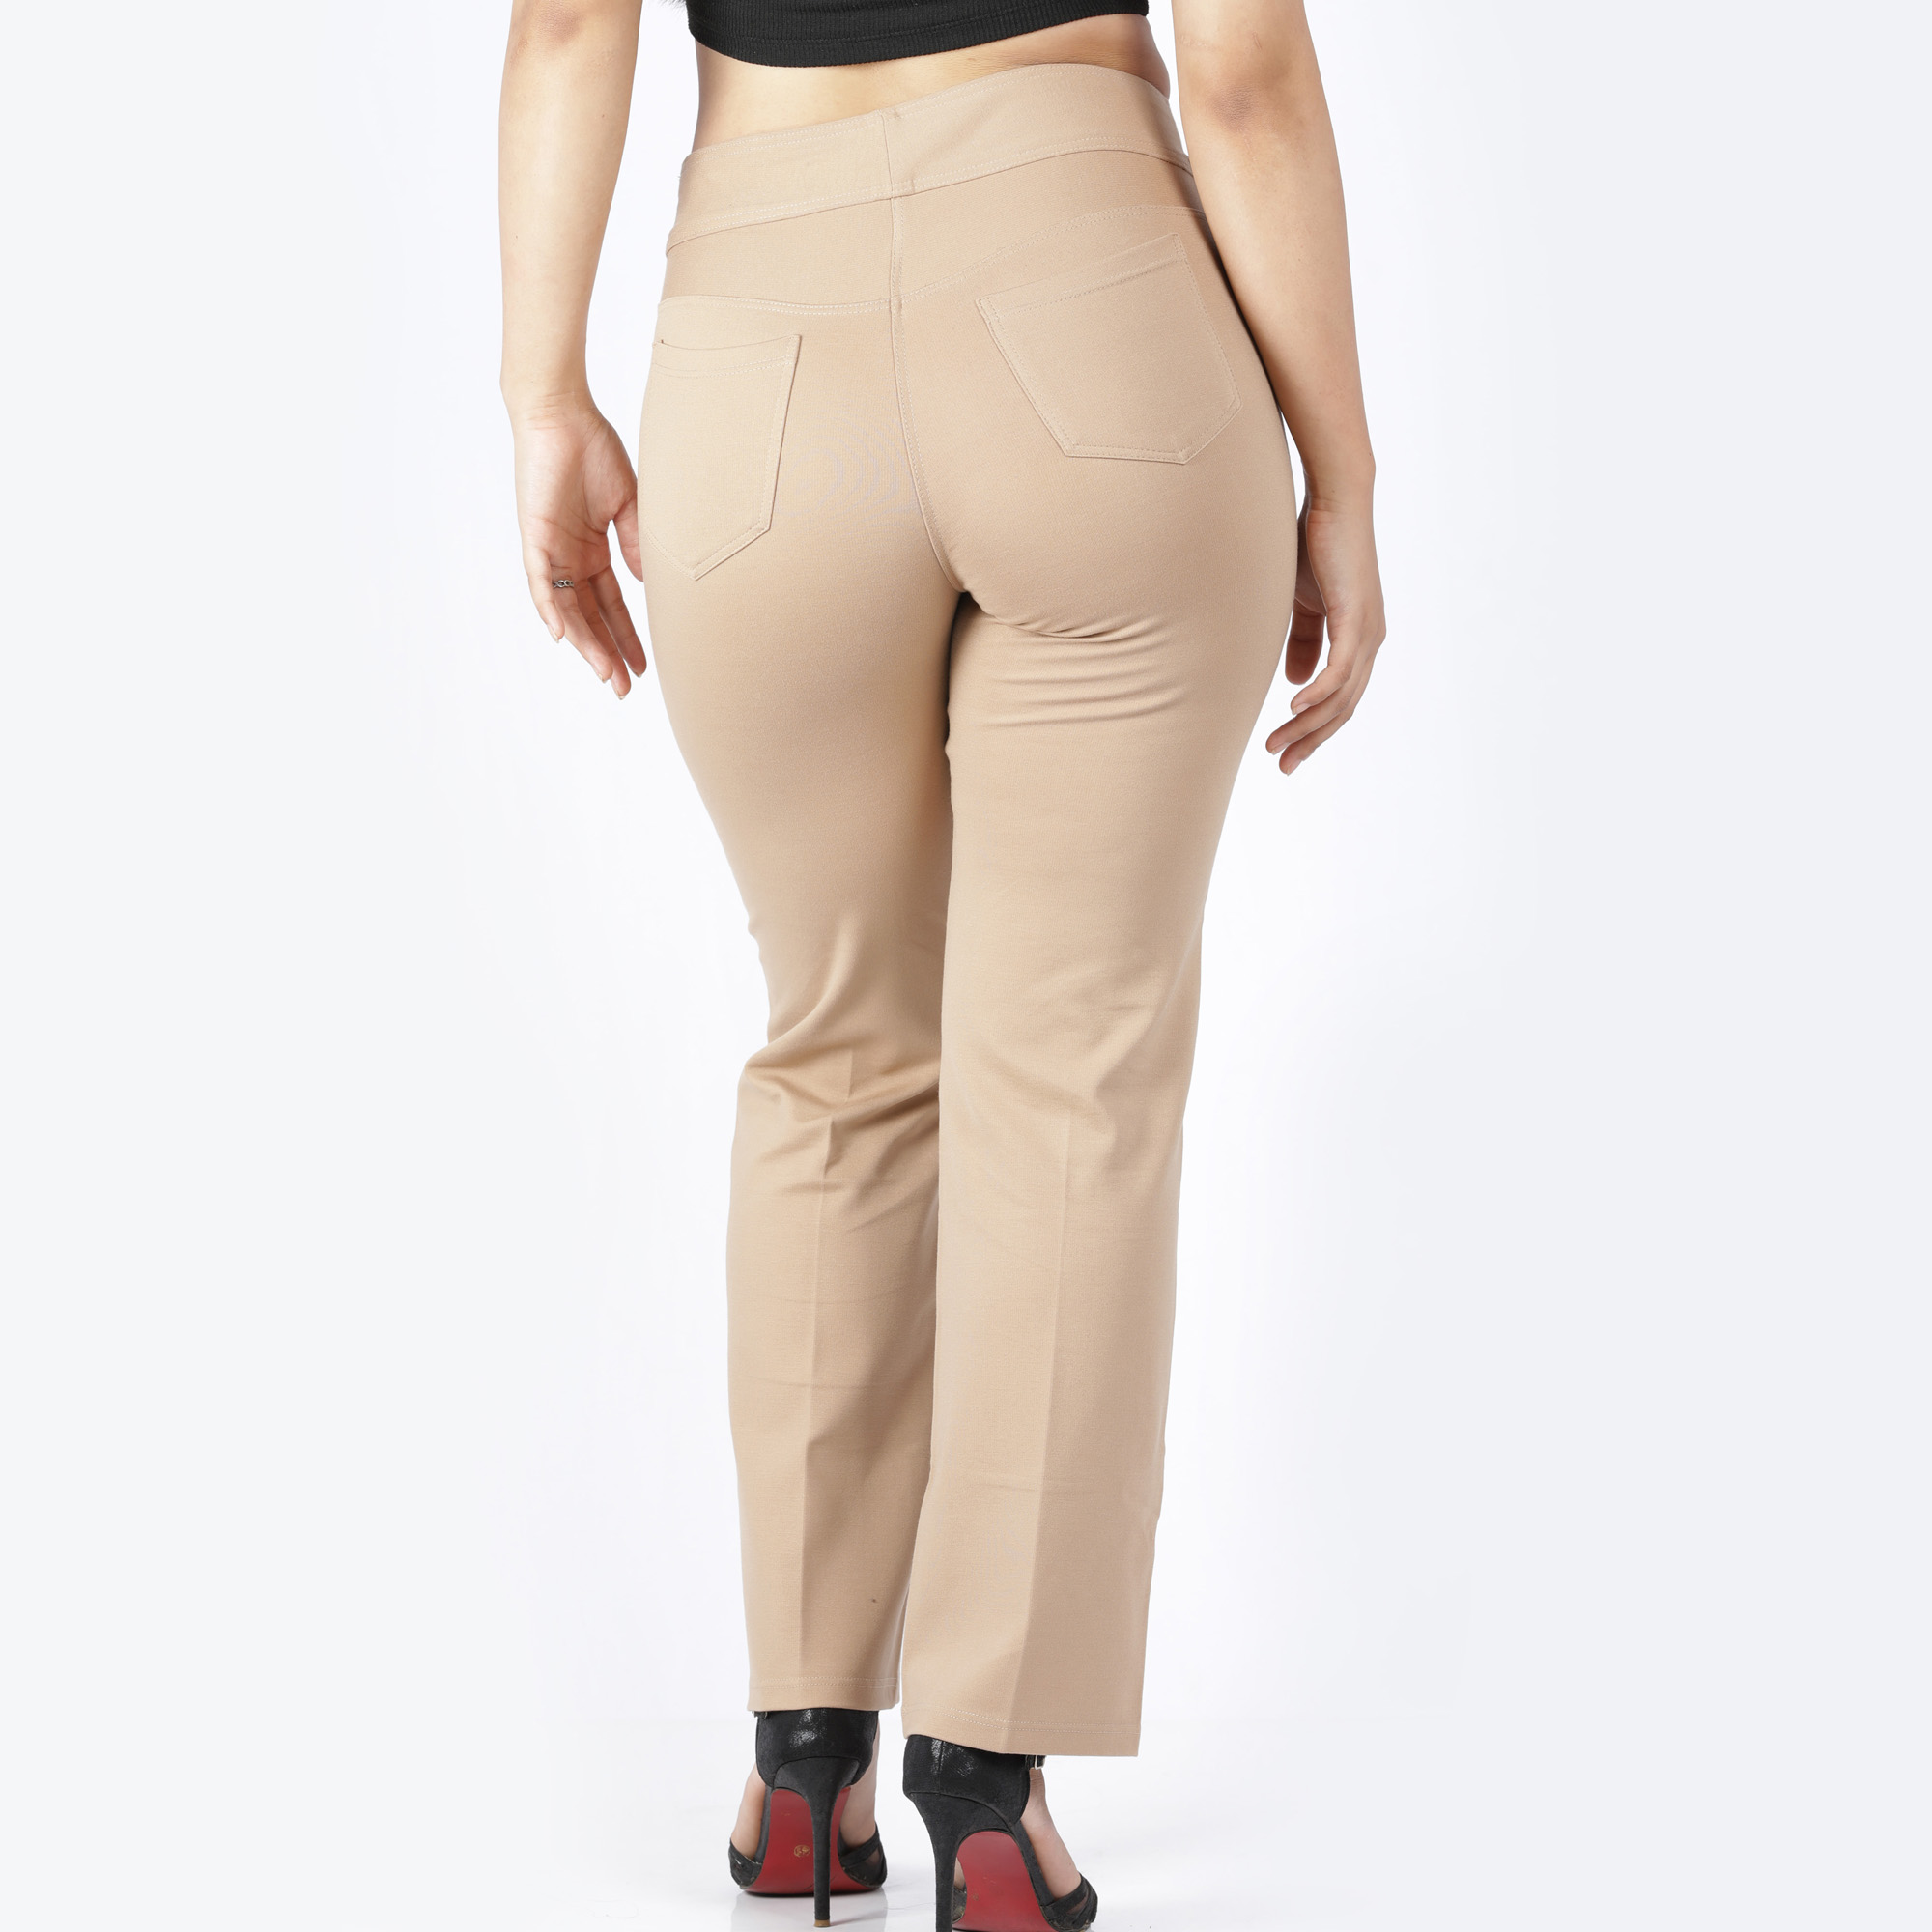 Khaki pants for women - Tummy tucker straight leg-2 back pockets - Belore  Slims